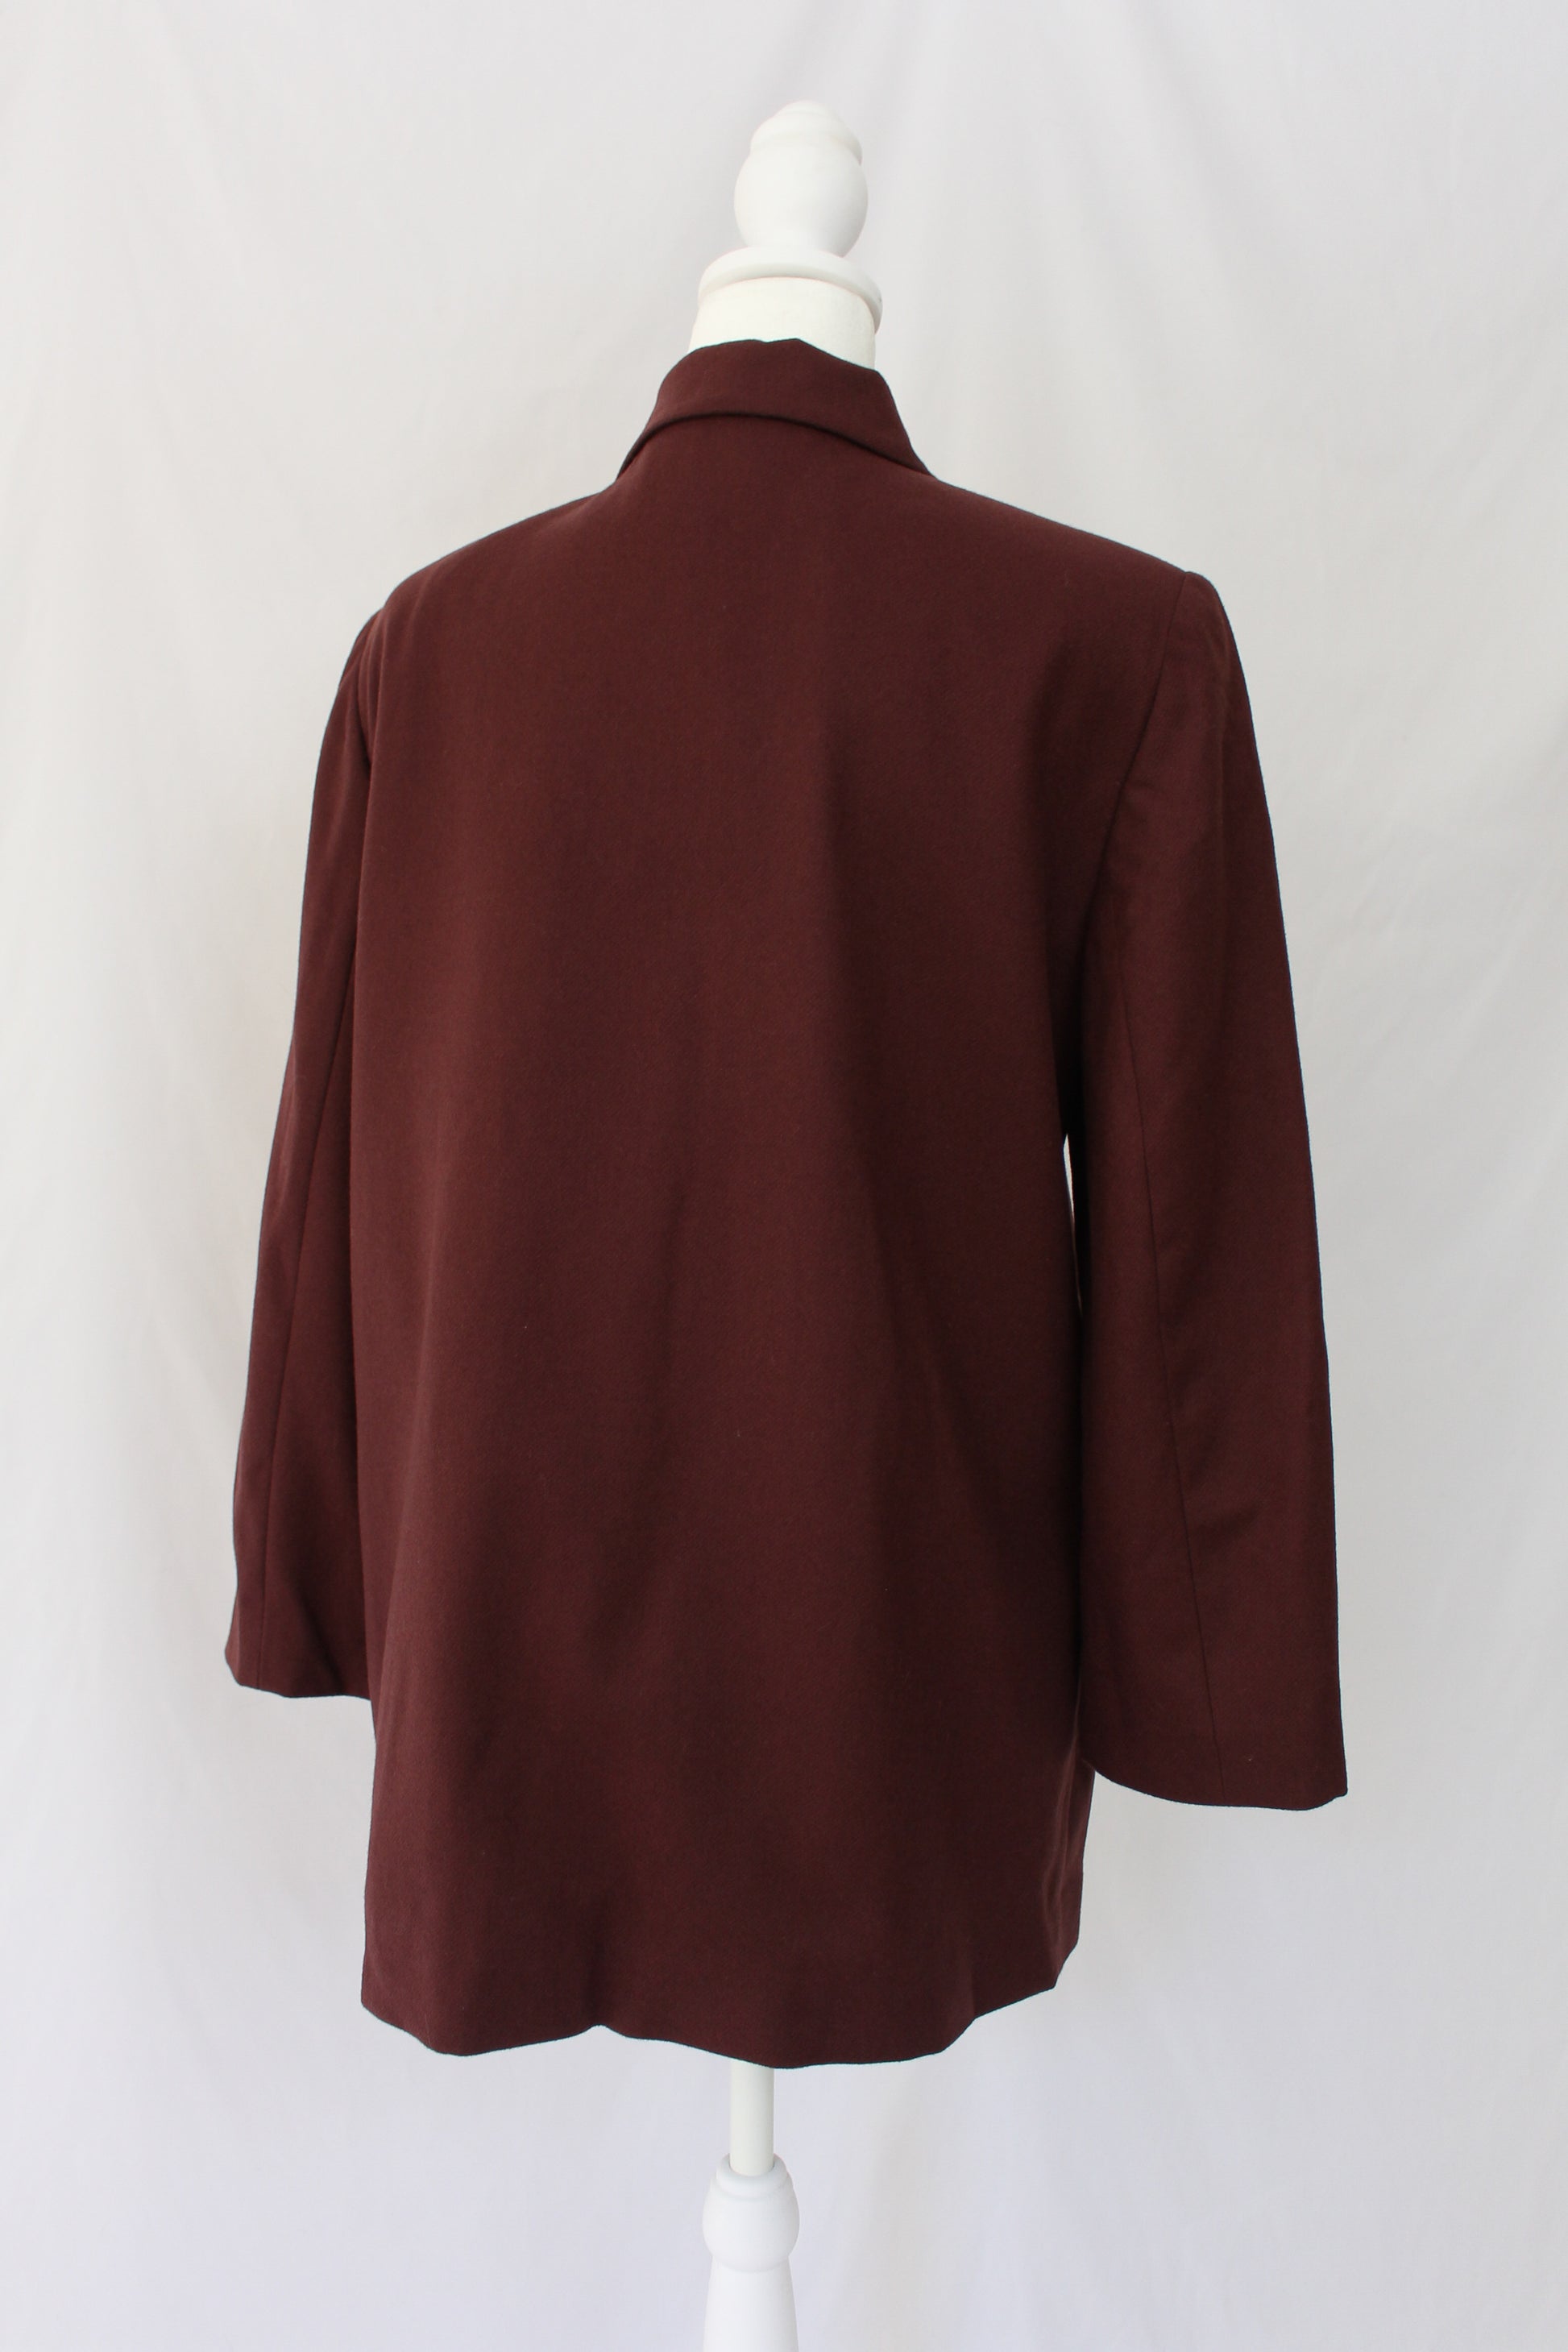 vintage maroon wool blazer